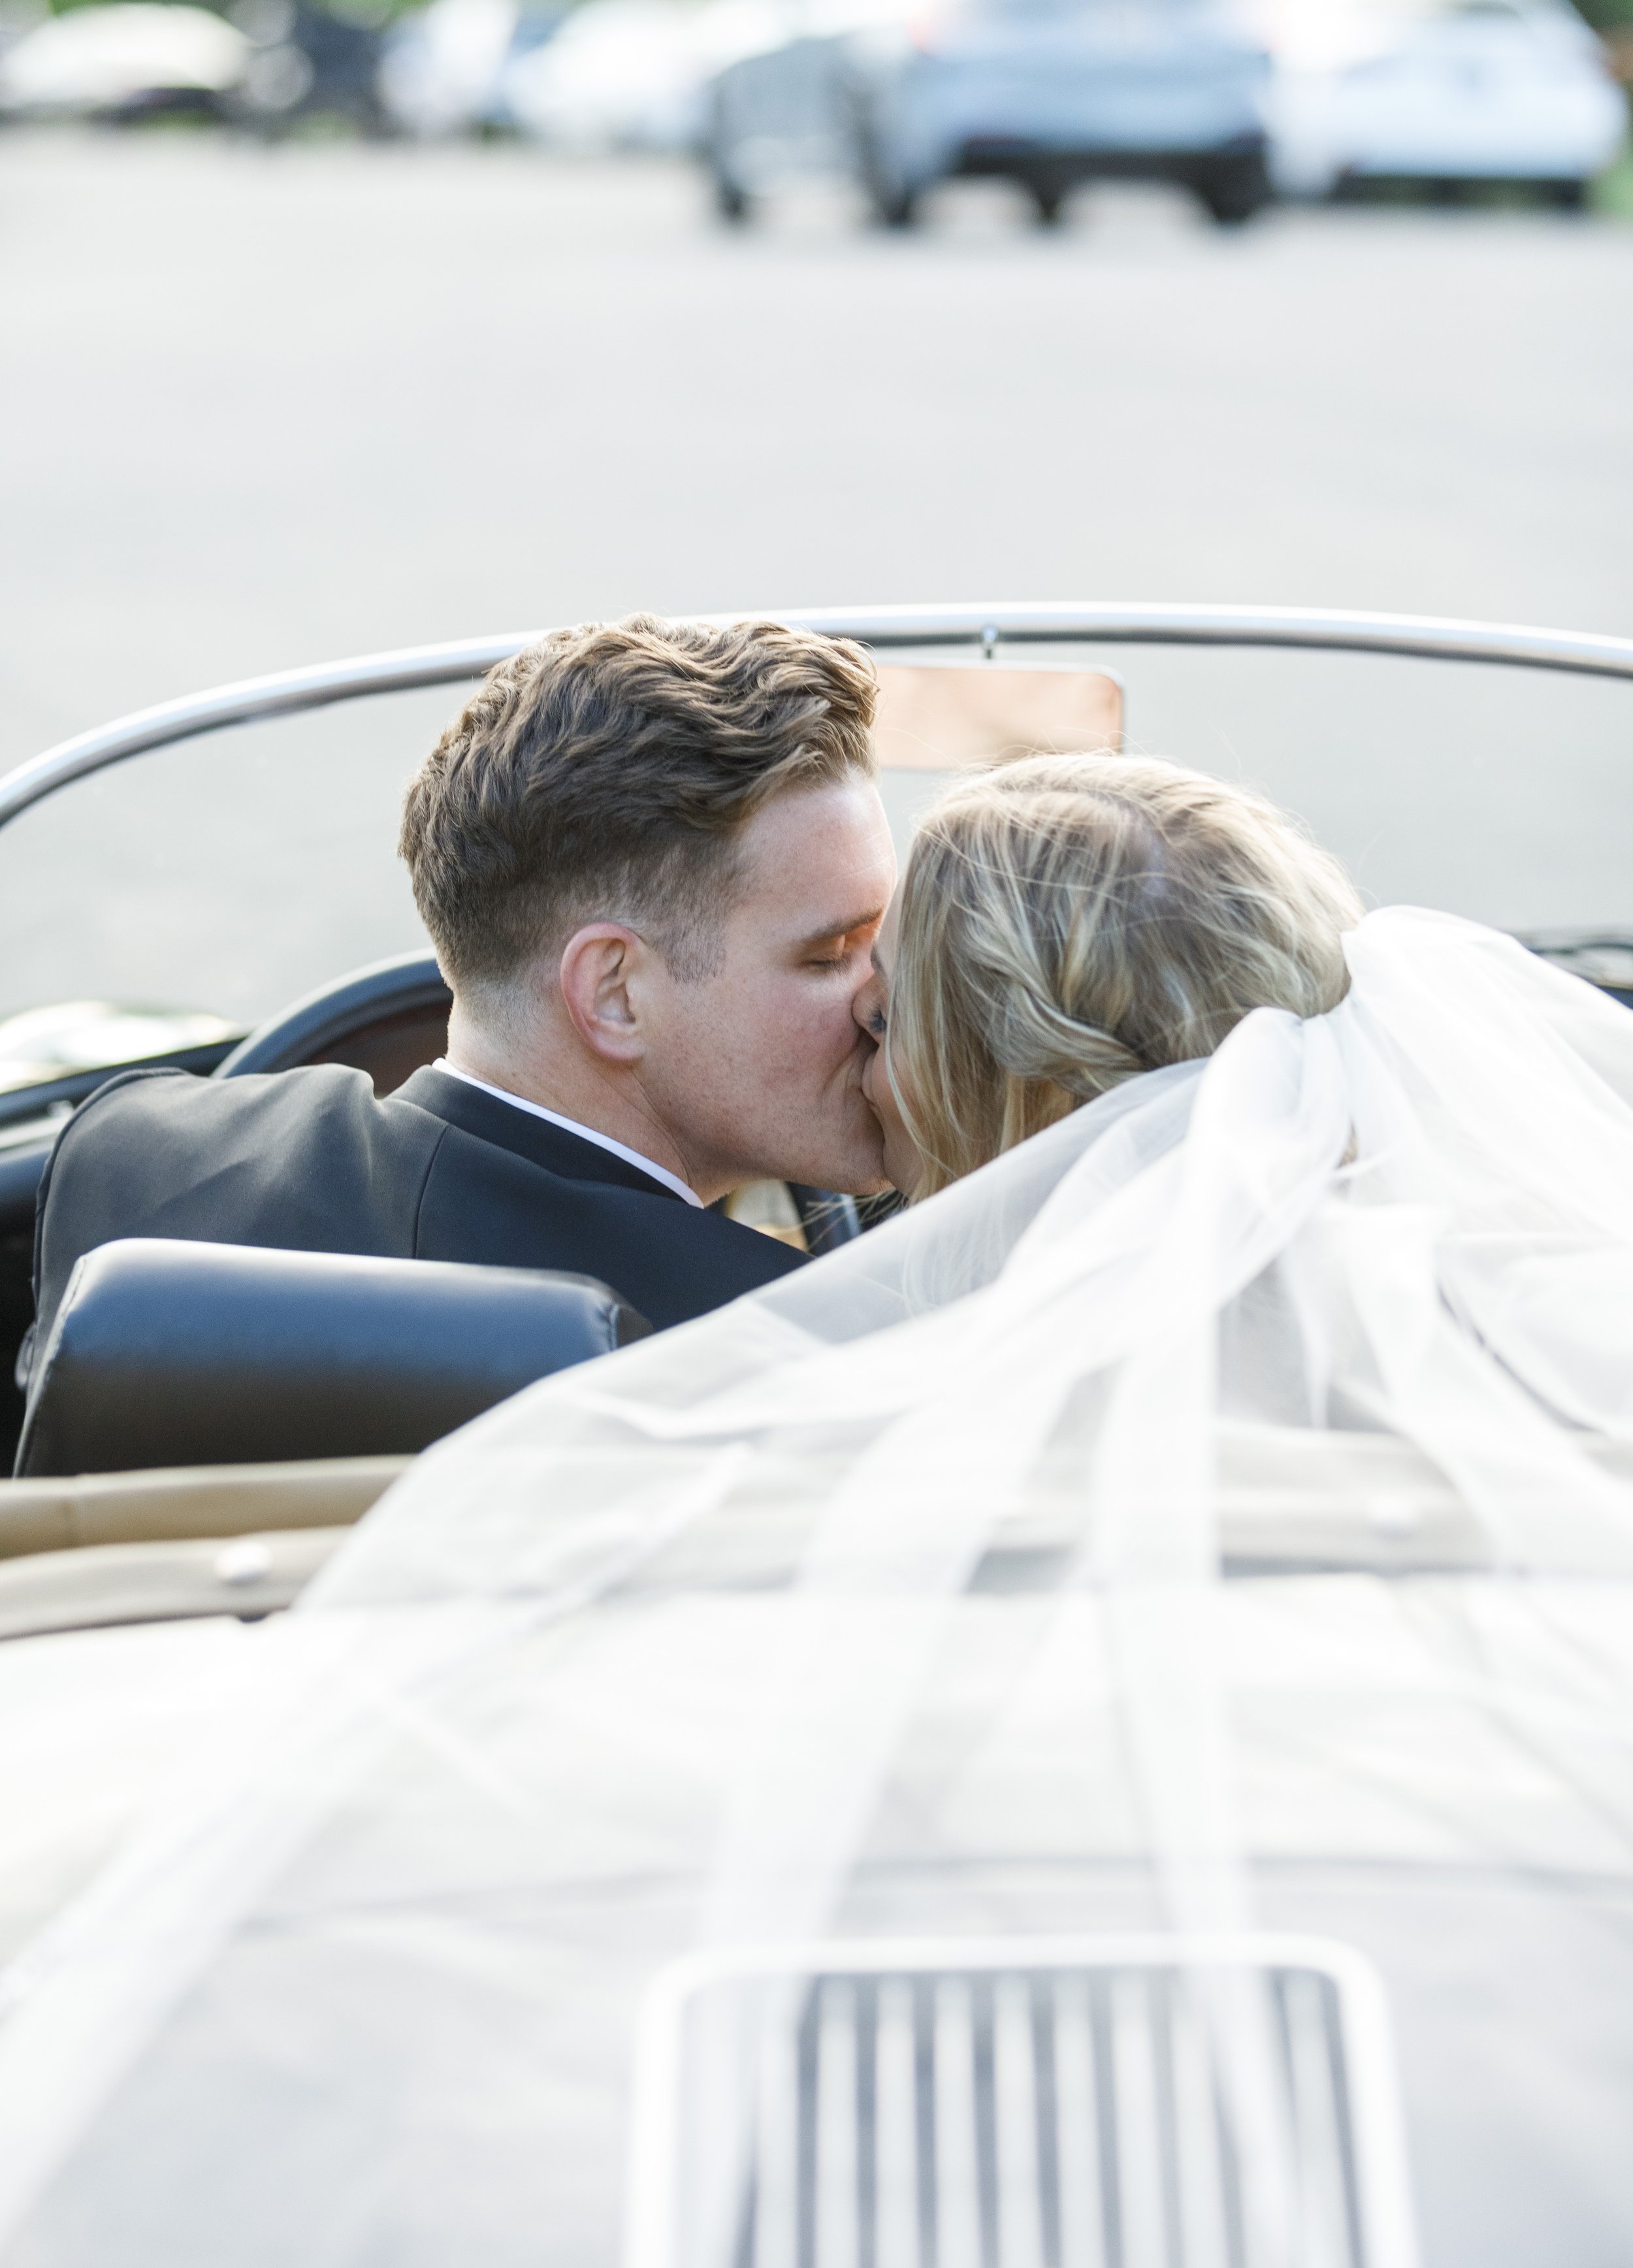  The newlyweds share a kiss in a classic Porsche with the bride’s veil flowing behind them. #tonygrove #cachevalley #utahbride #ldstemplewedding #savannarichardsonphotography #utahweddingphotographer #summerwedding #outdoorreception #weddingveilshots